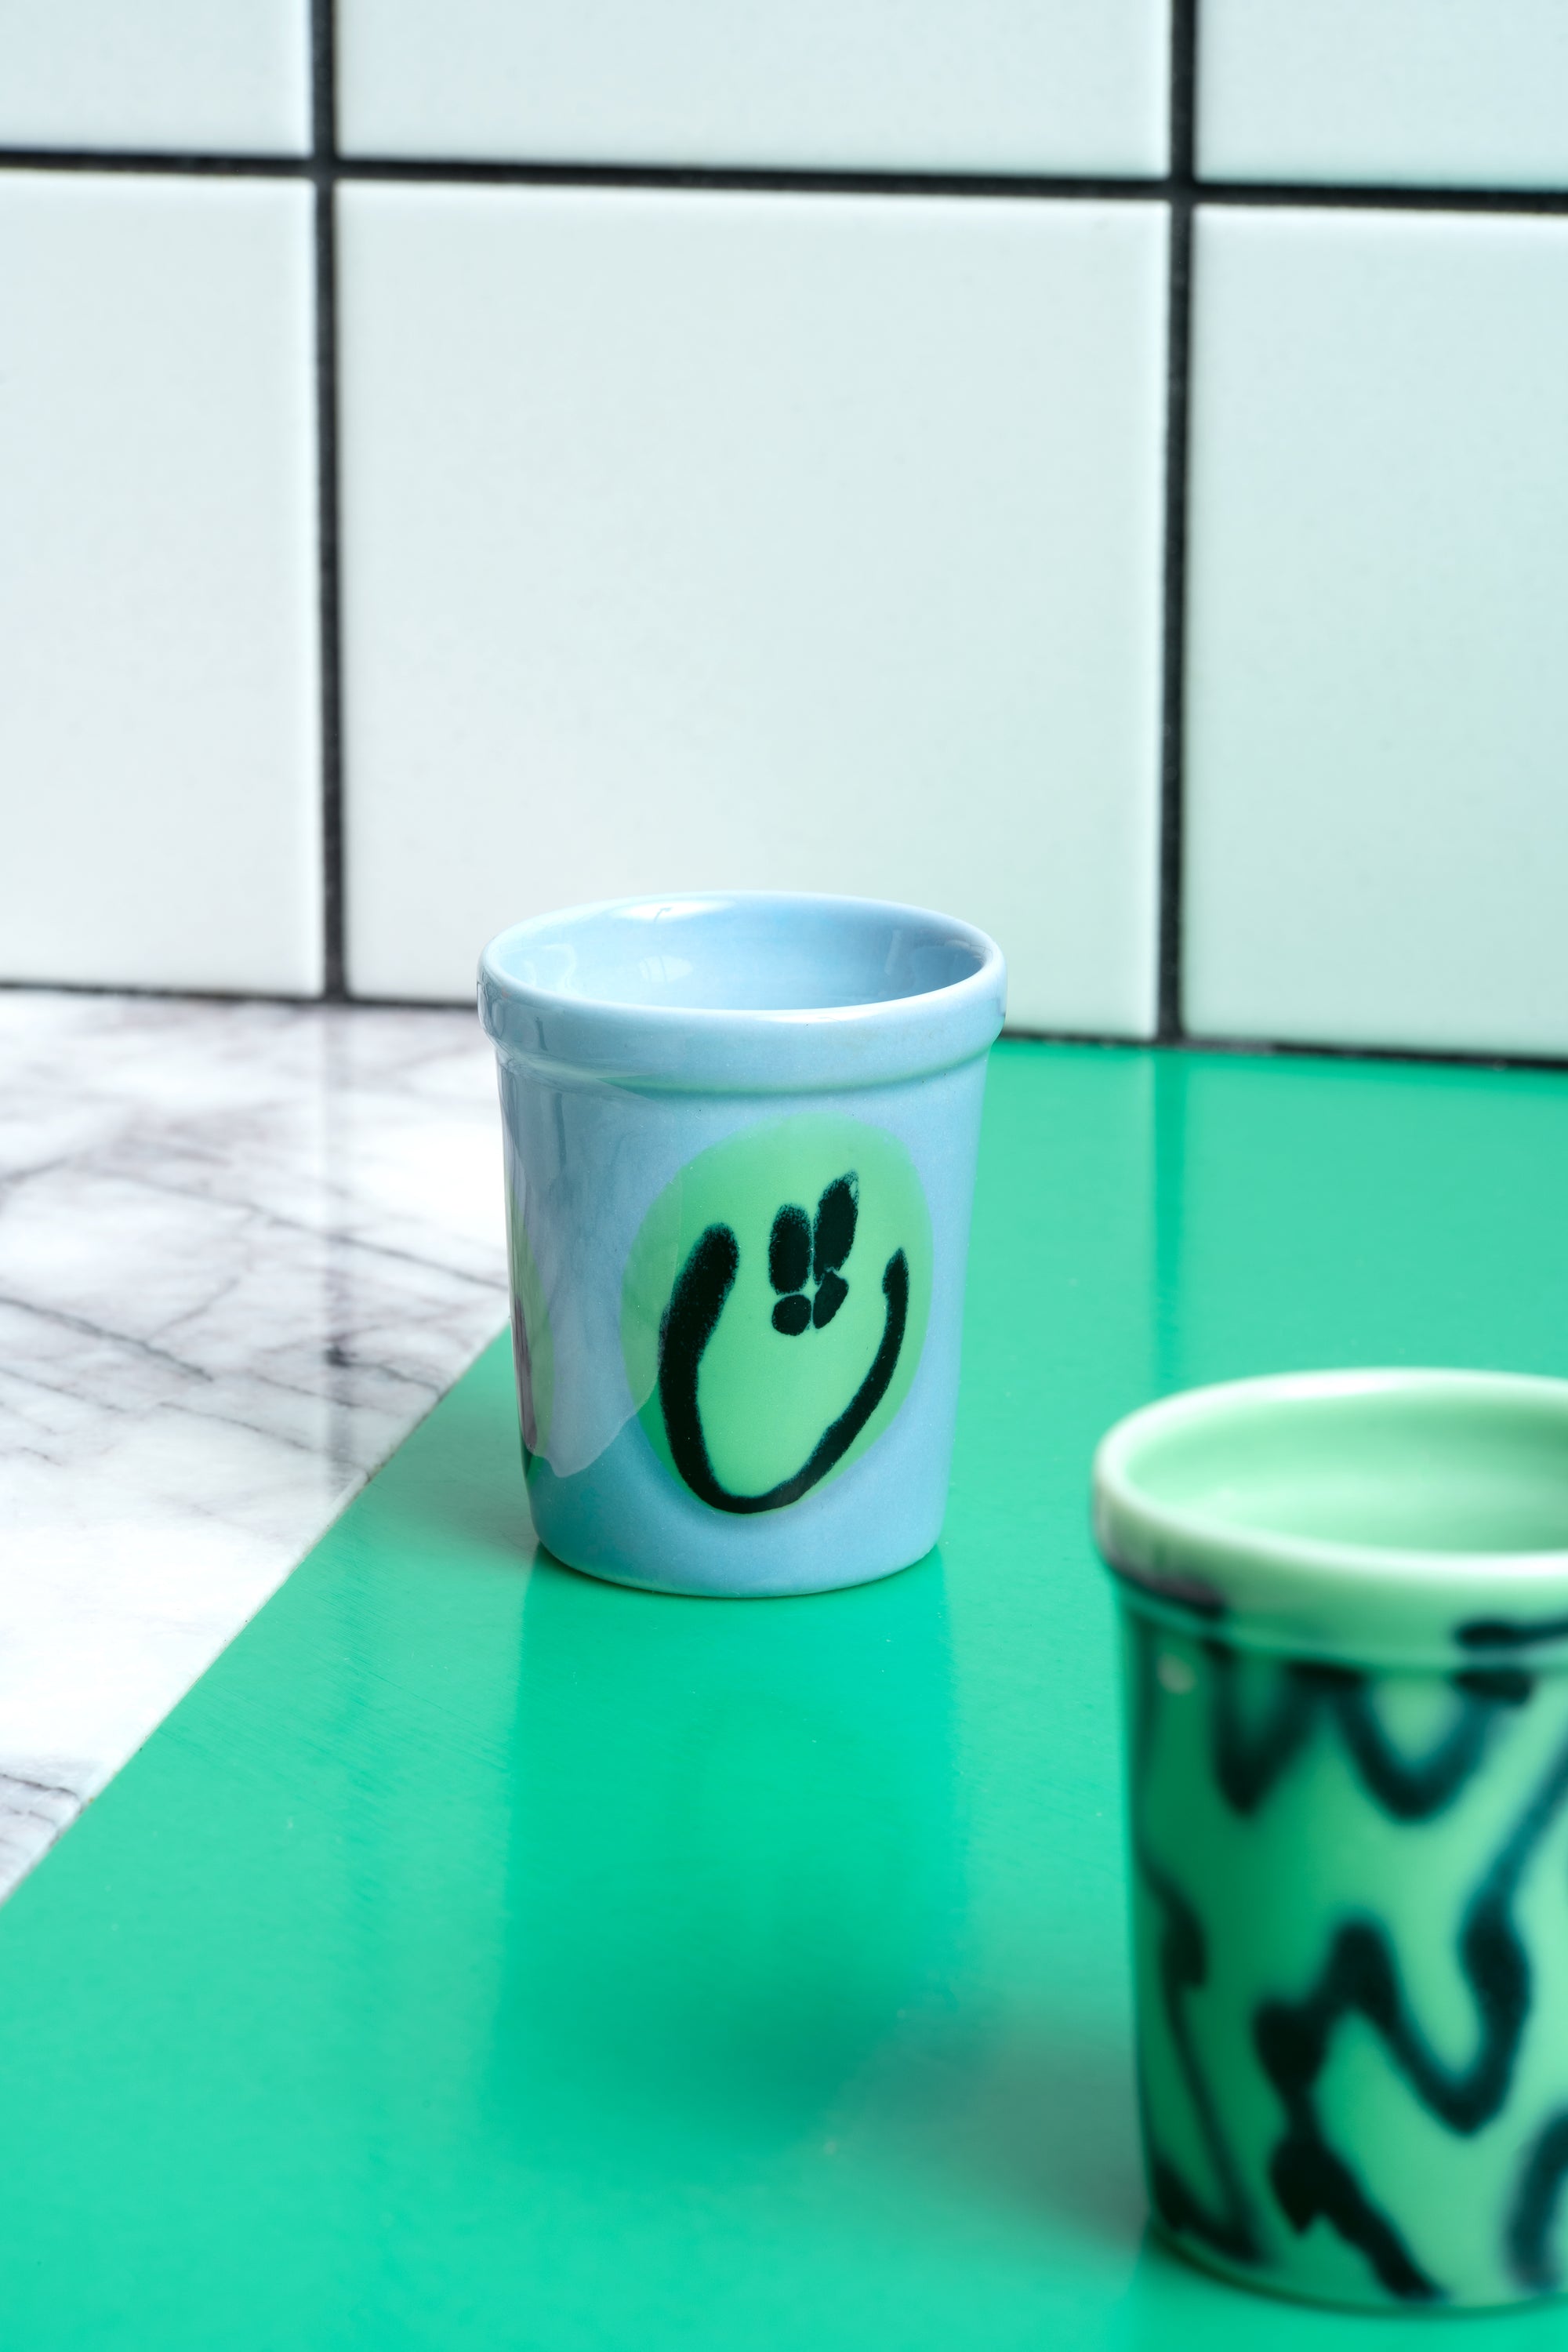 The Espresso Cups – Fallis Studios